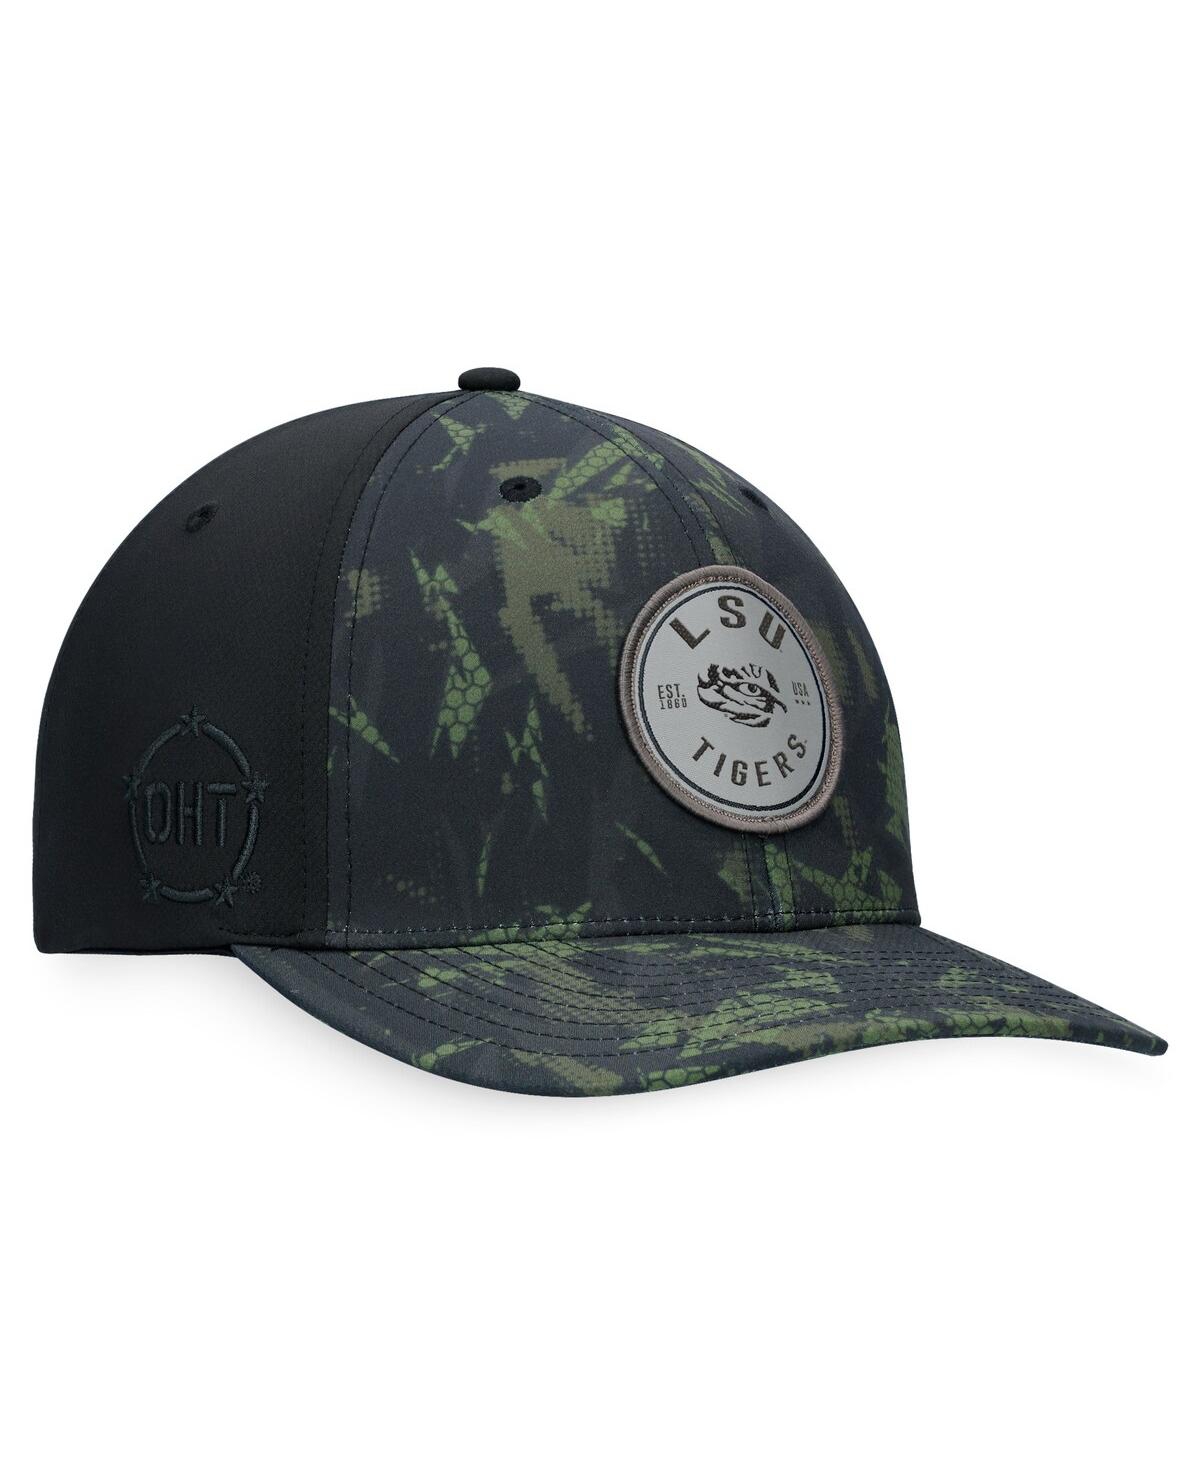 Shop Top Of The World Men's  Black Lsu Tigers Oht Military-inspired Appreciation Camo Render Flex Hat